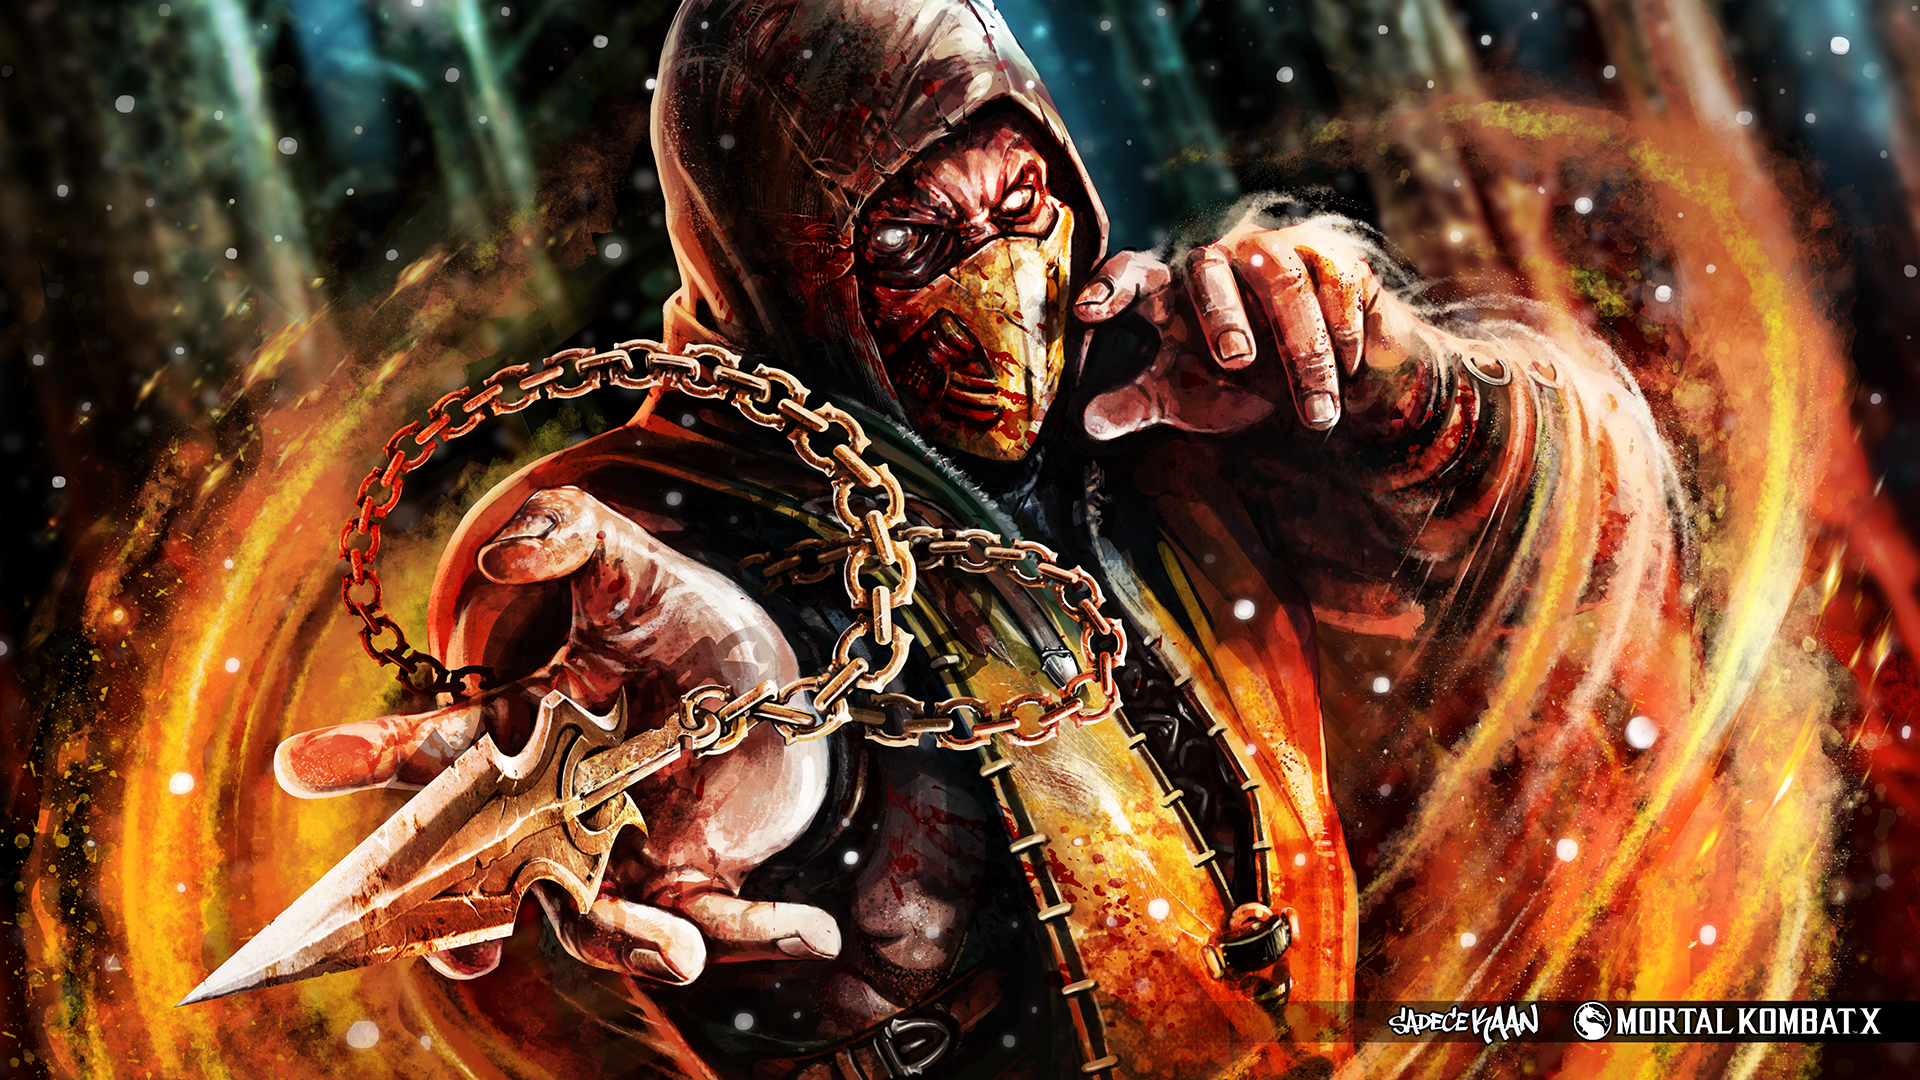 Los mejores fondos de pantalla de Mortal Kombat X para la pantalla del teléfono